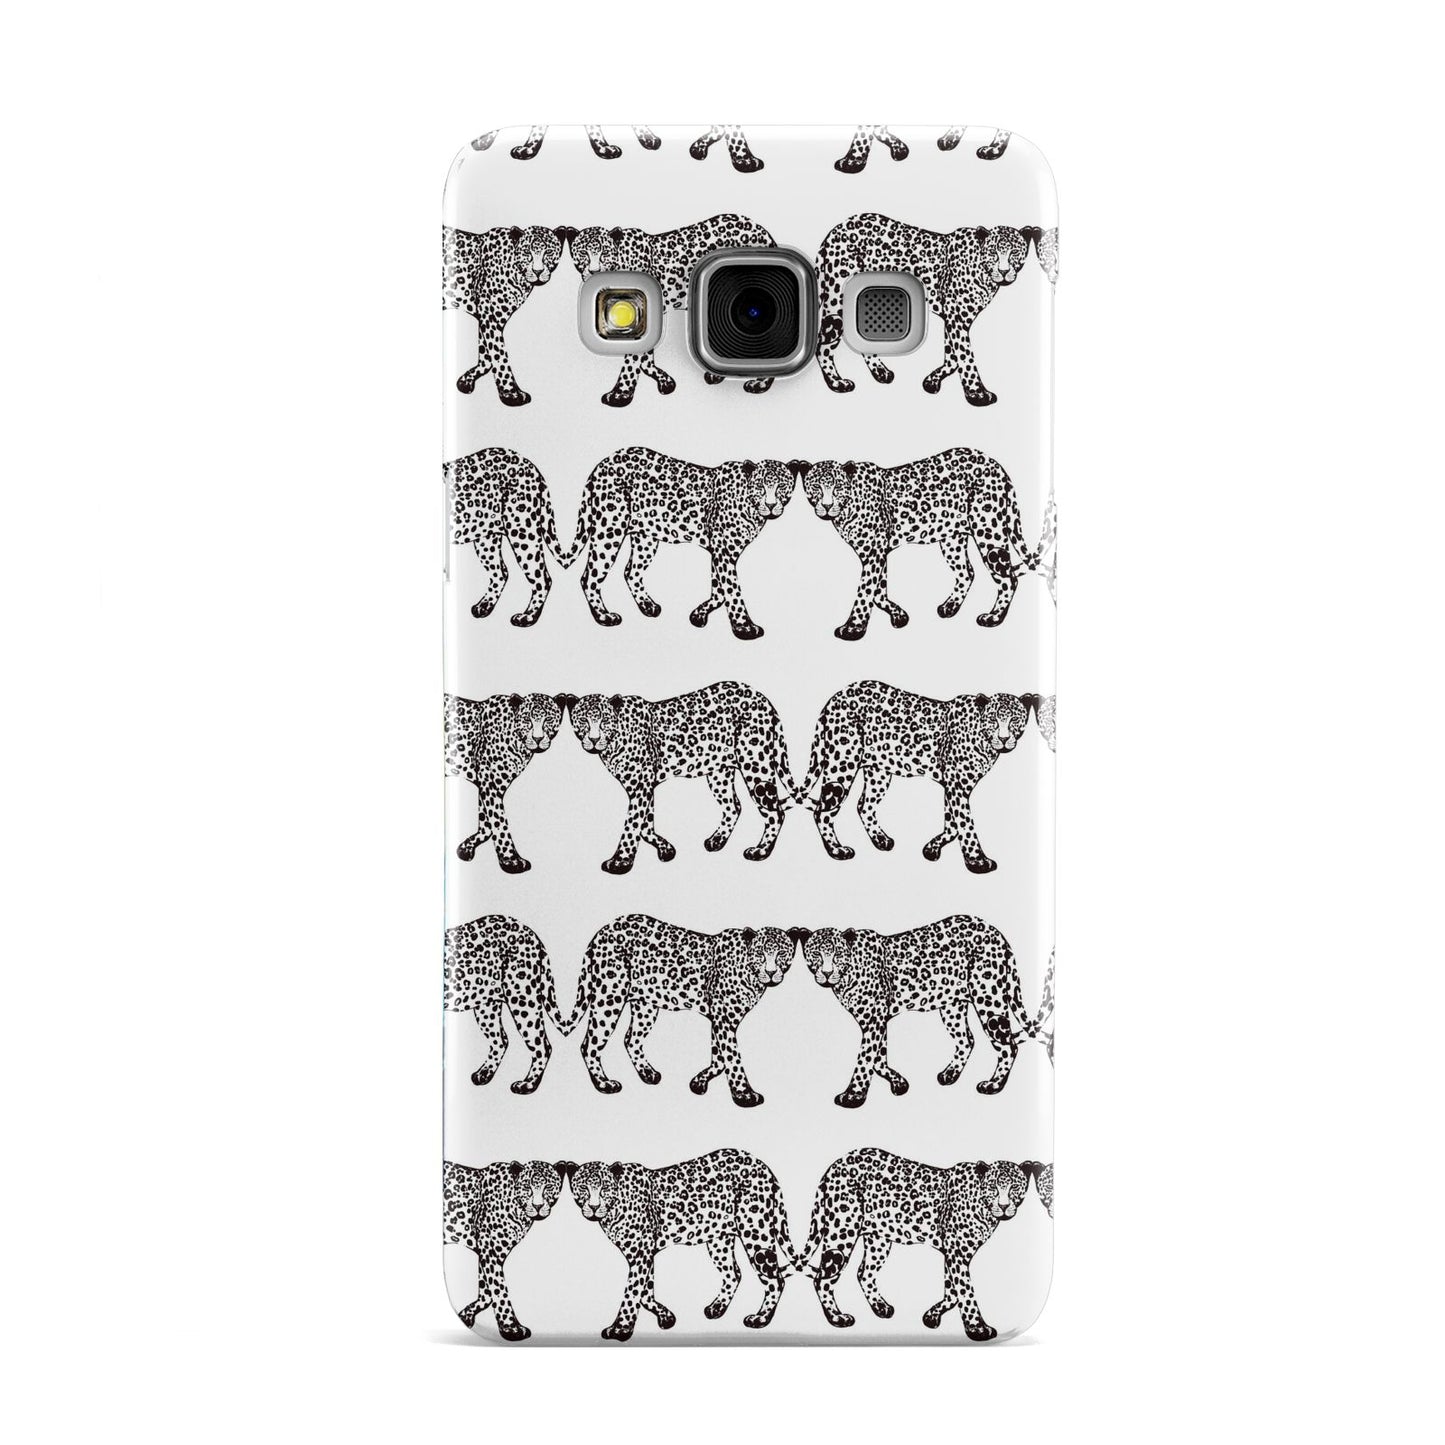 Monochrome Mirrored Leopard Print Samsung Galaxy A3 Case